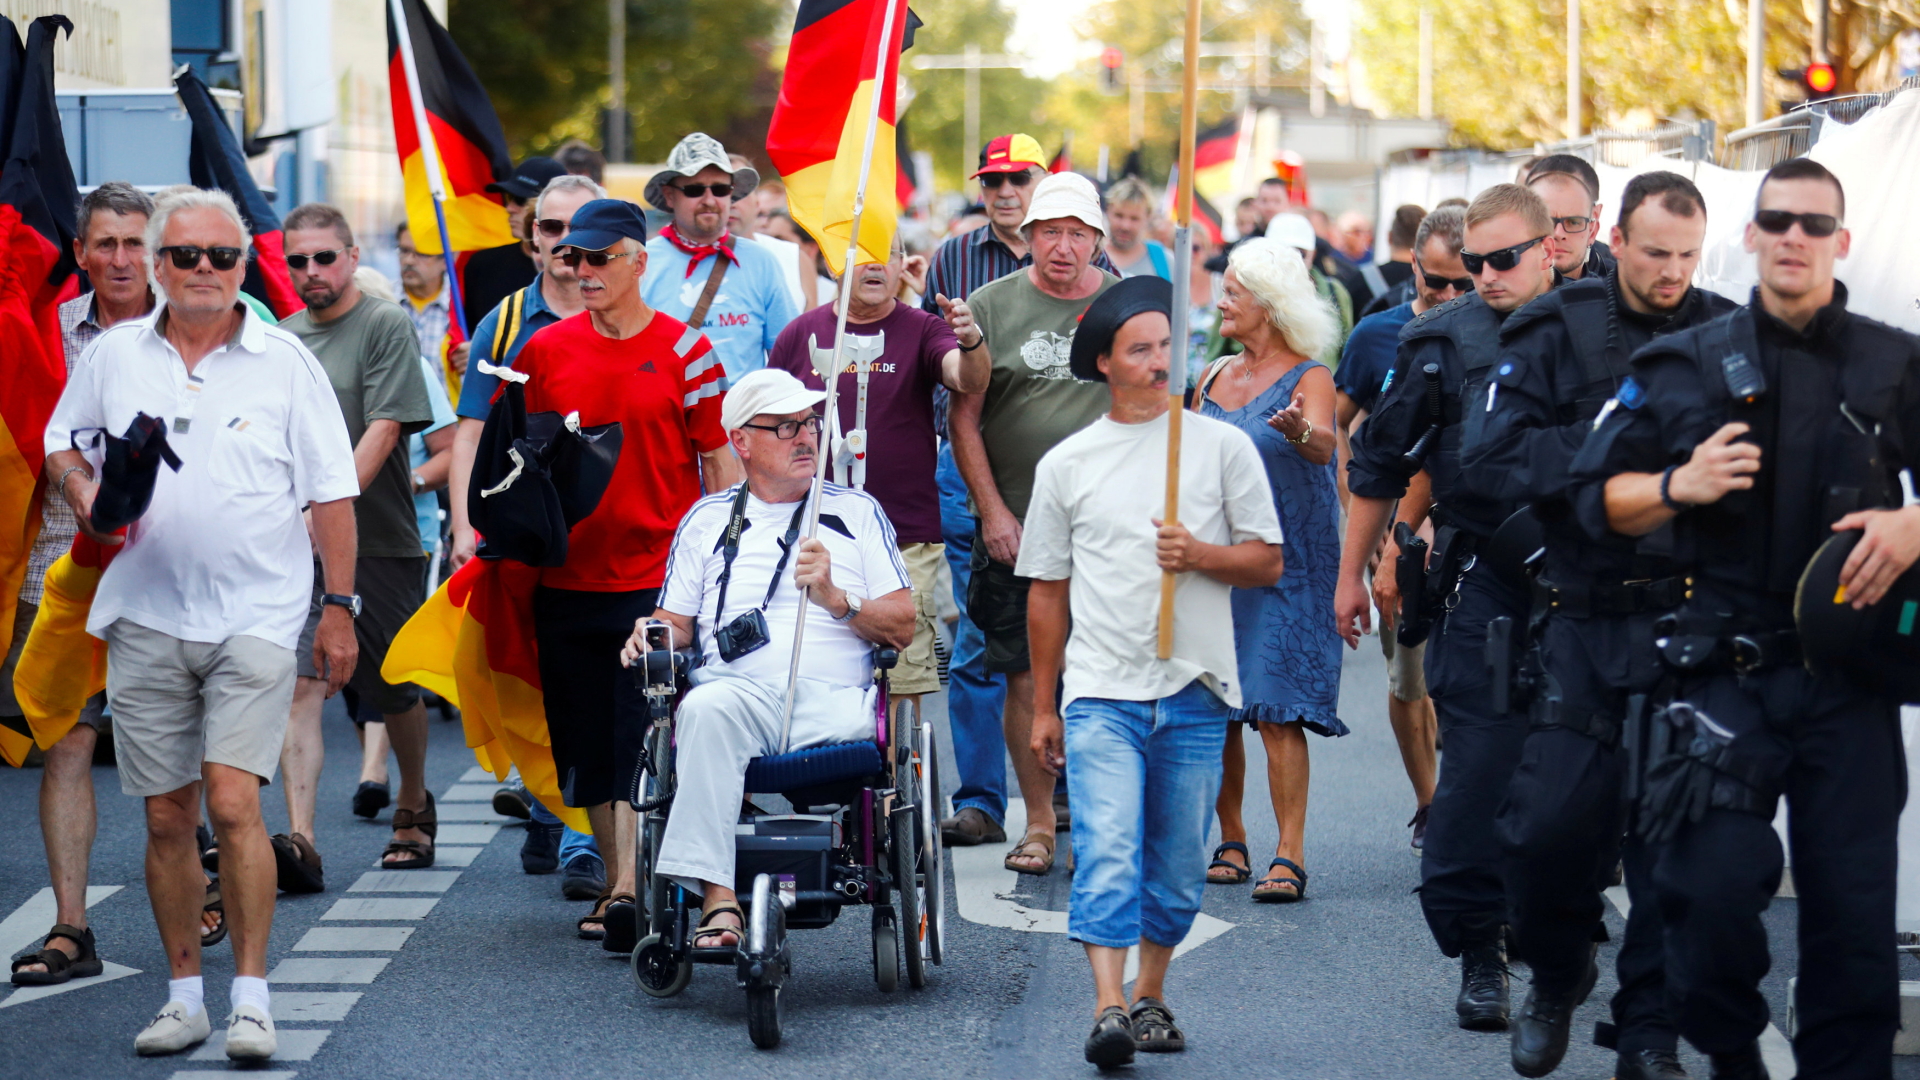 Pegida-Demonstration gegen Merkel in Dresden | Bildquelle: REUTERS